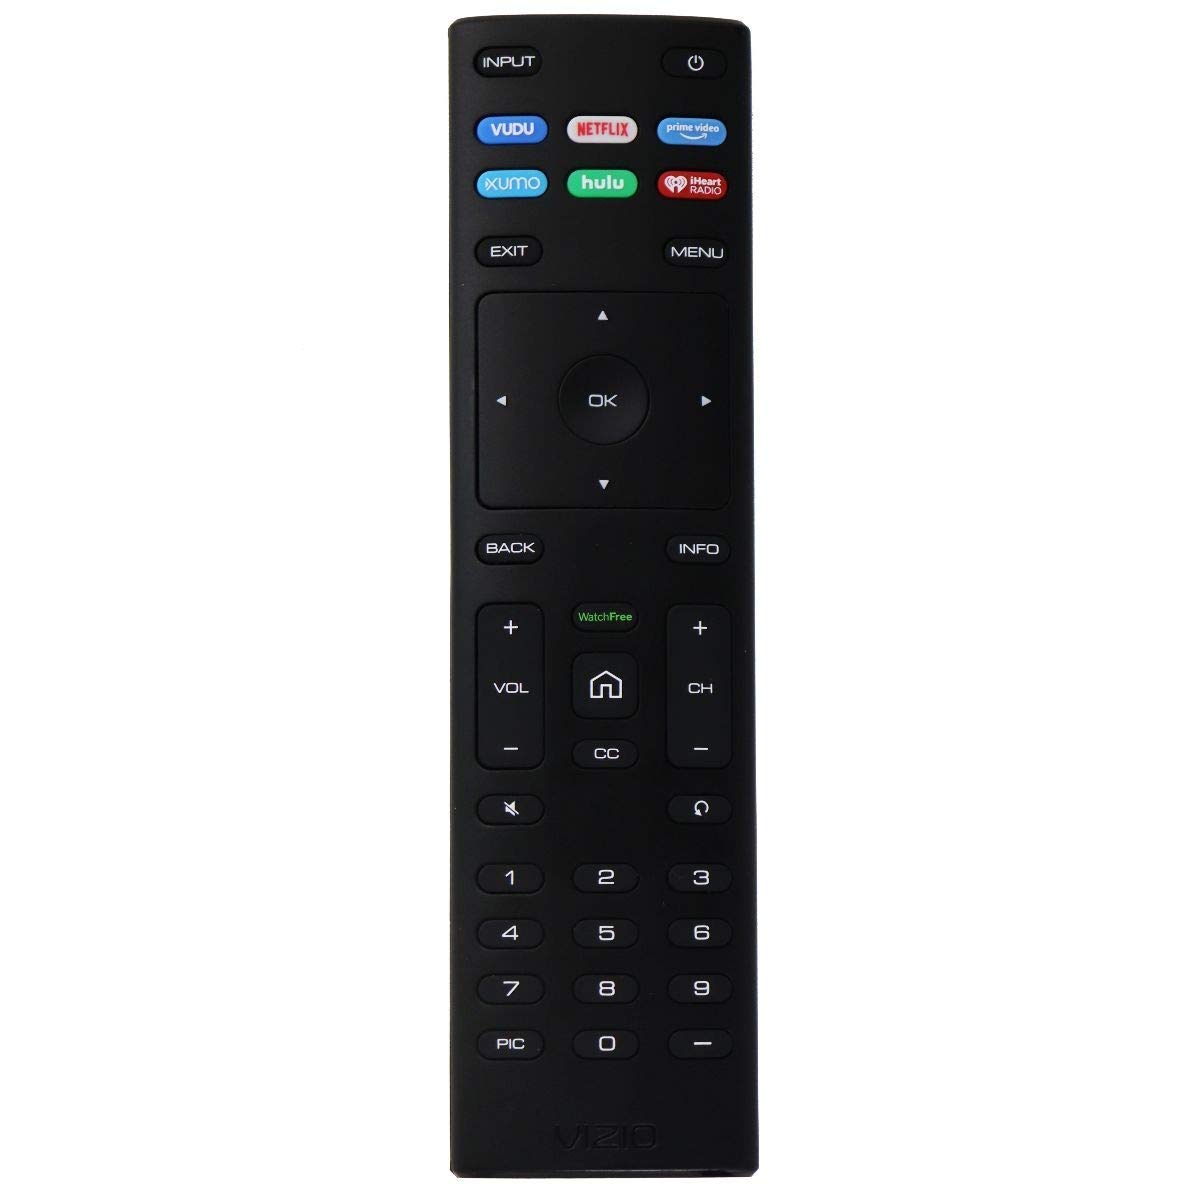 Vizio OEM Remote Control with Vudu/Netflix/Prime Video Hotkeys - Black (XRT136) (Renewed)